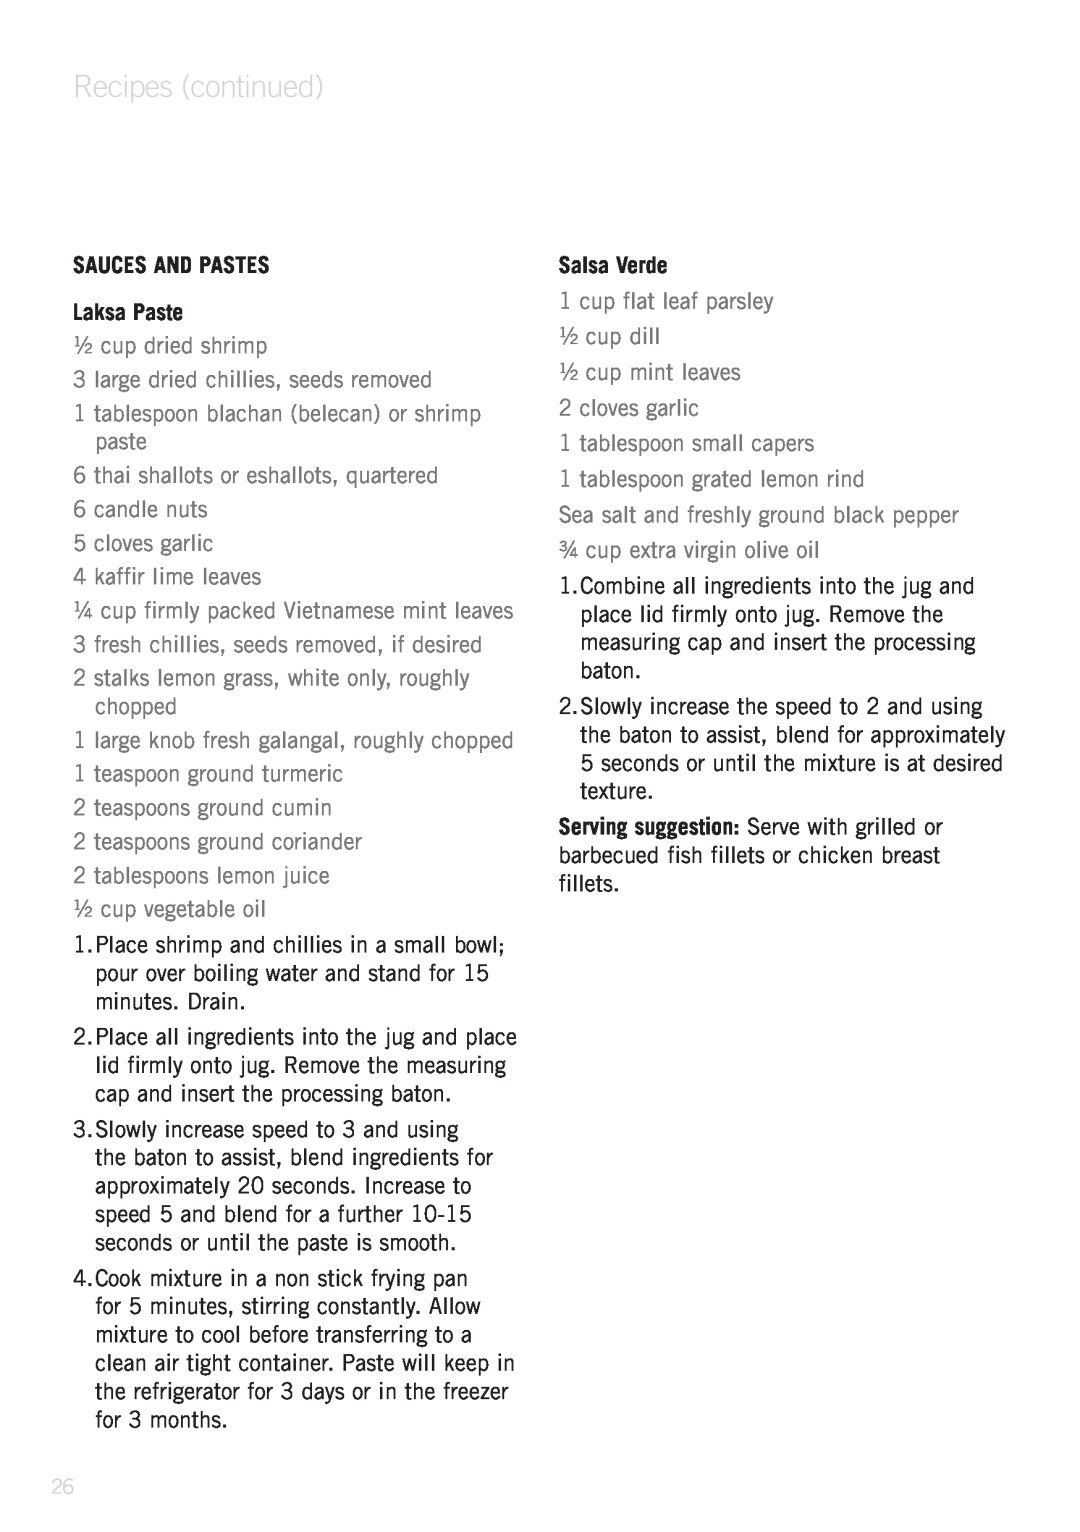 Sunbeam PB9500 manual SAUCES AND PASTES Laksa Paste, Salsa Verde, Recipes continued 